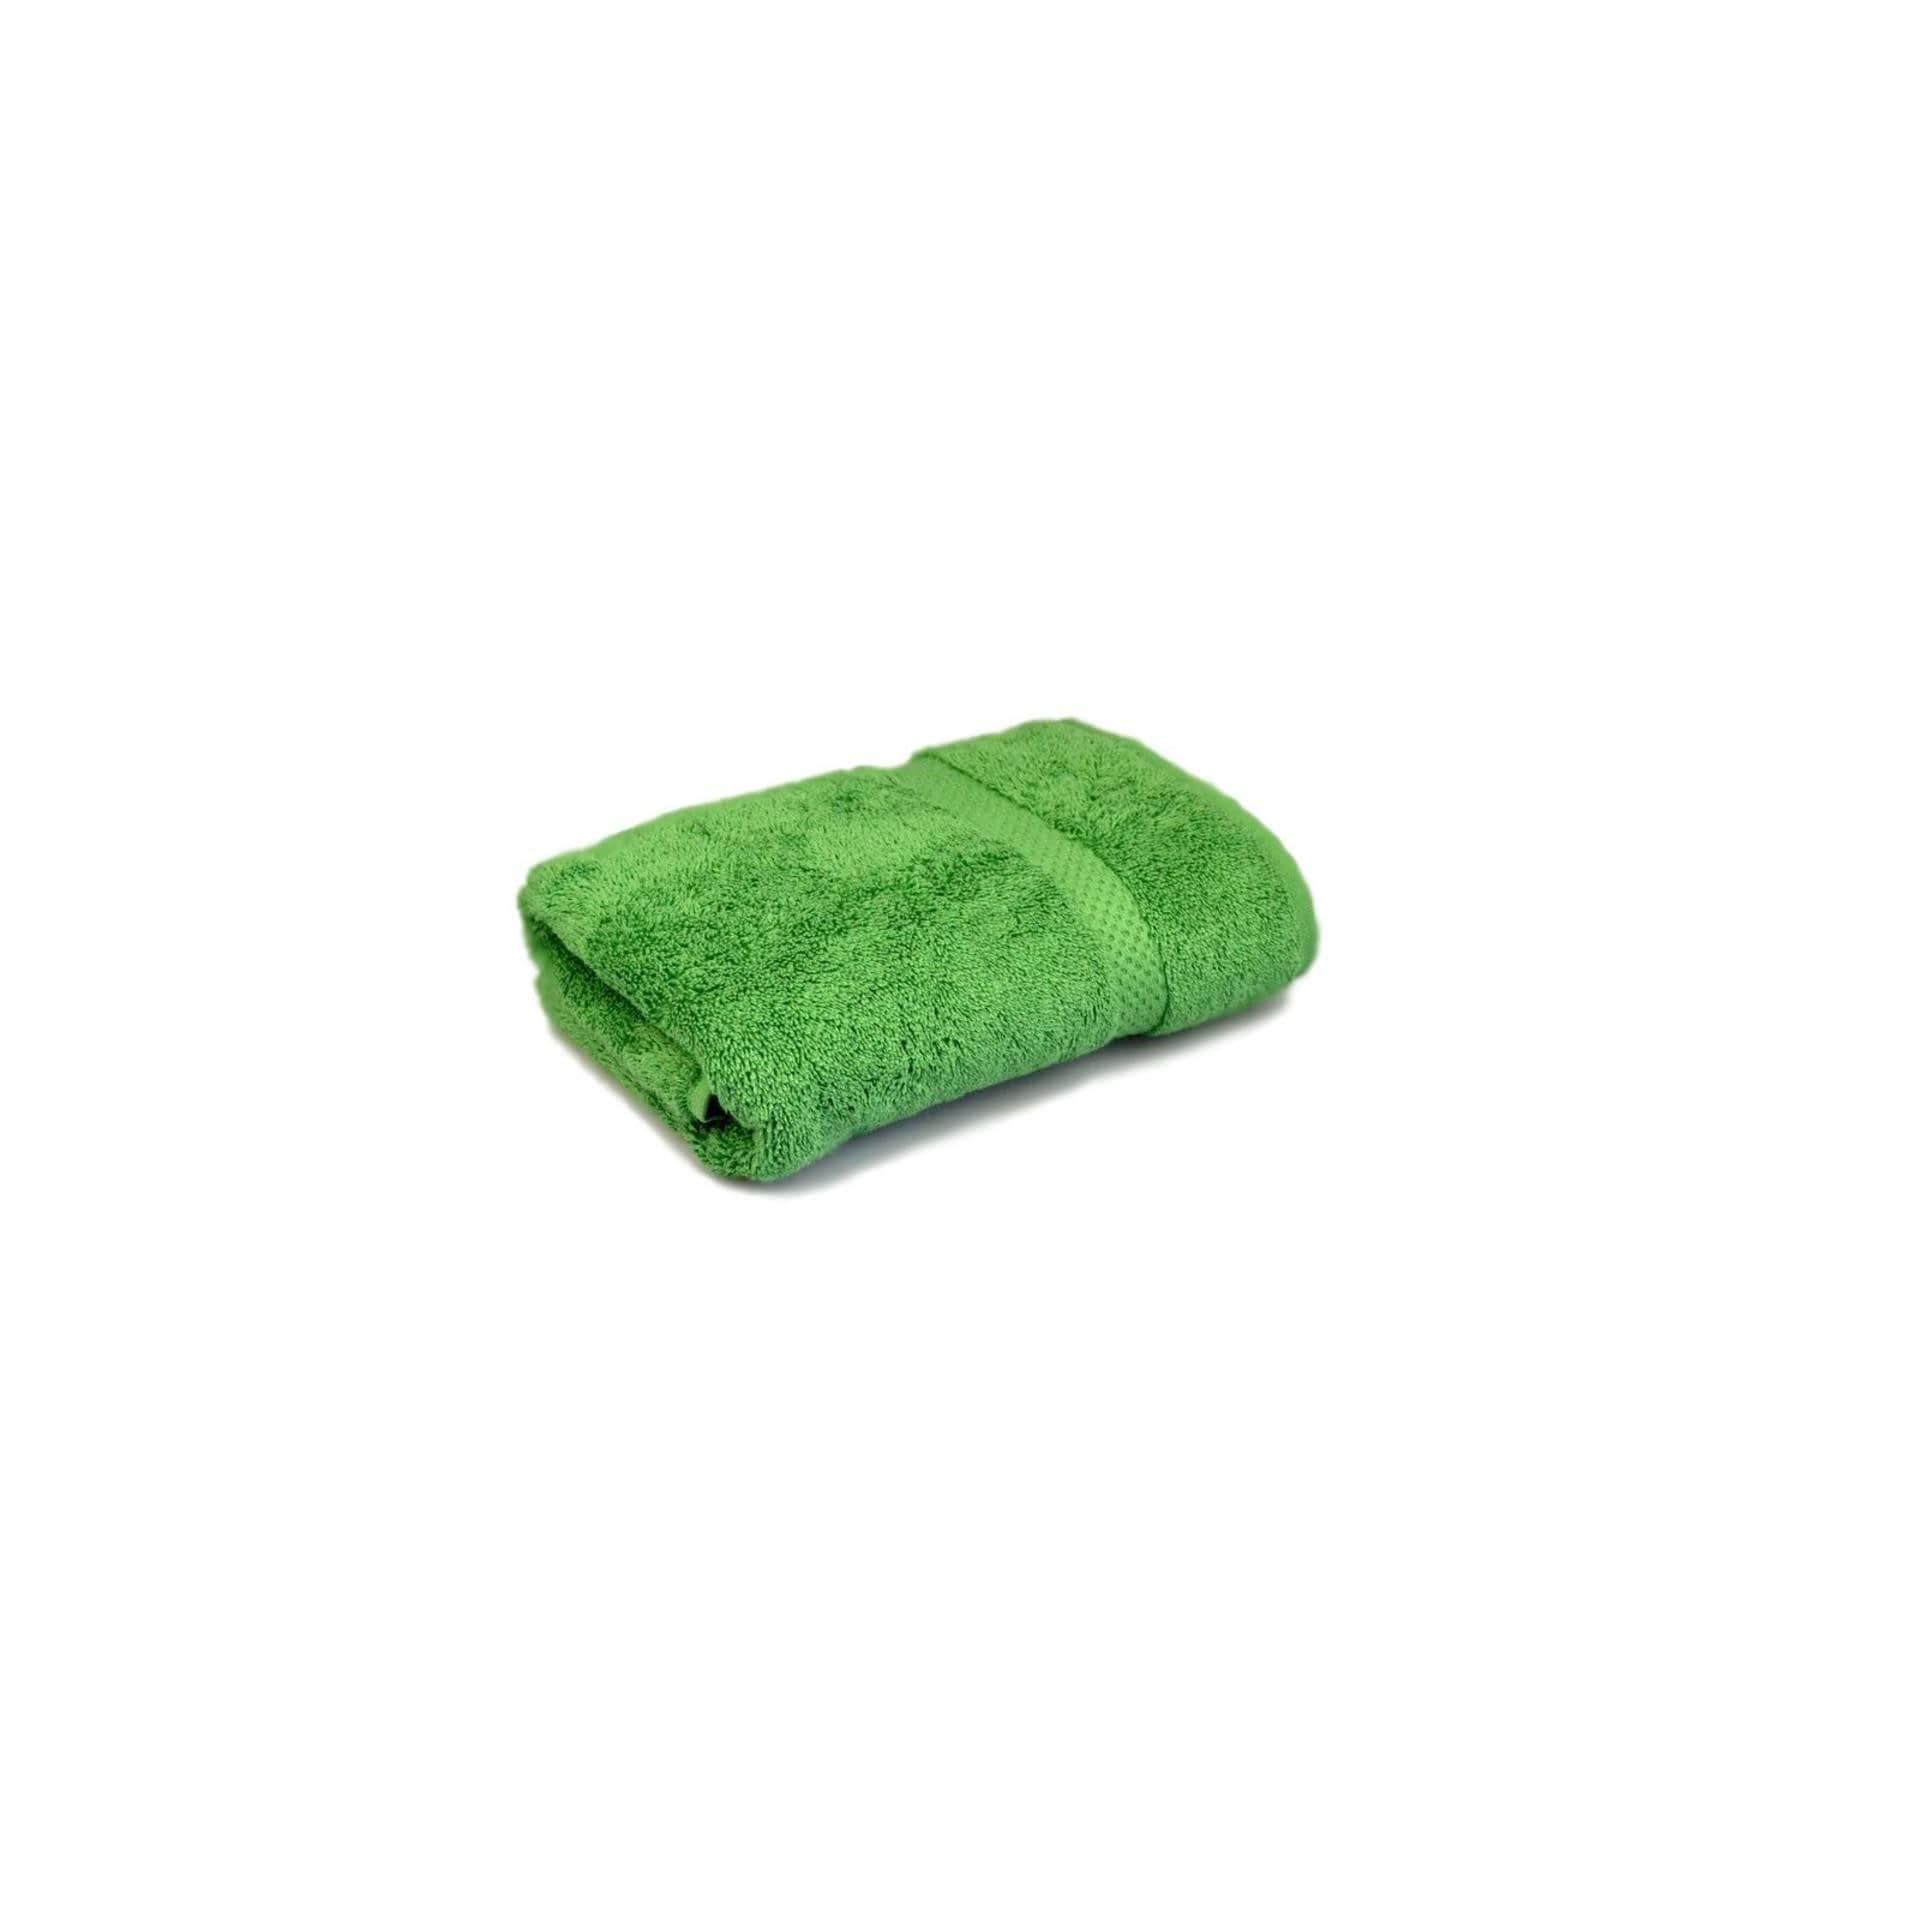 Ткани махровые полотенца - Полотенце пахровое зеленое 40х70 см